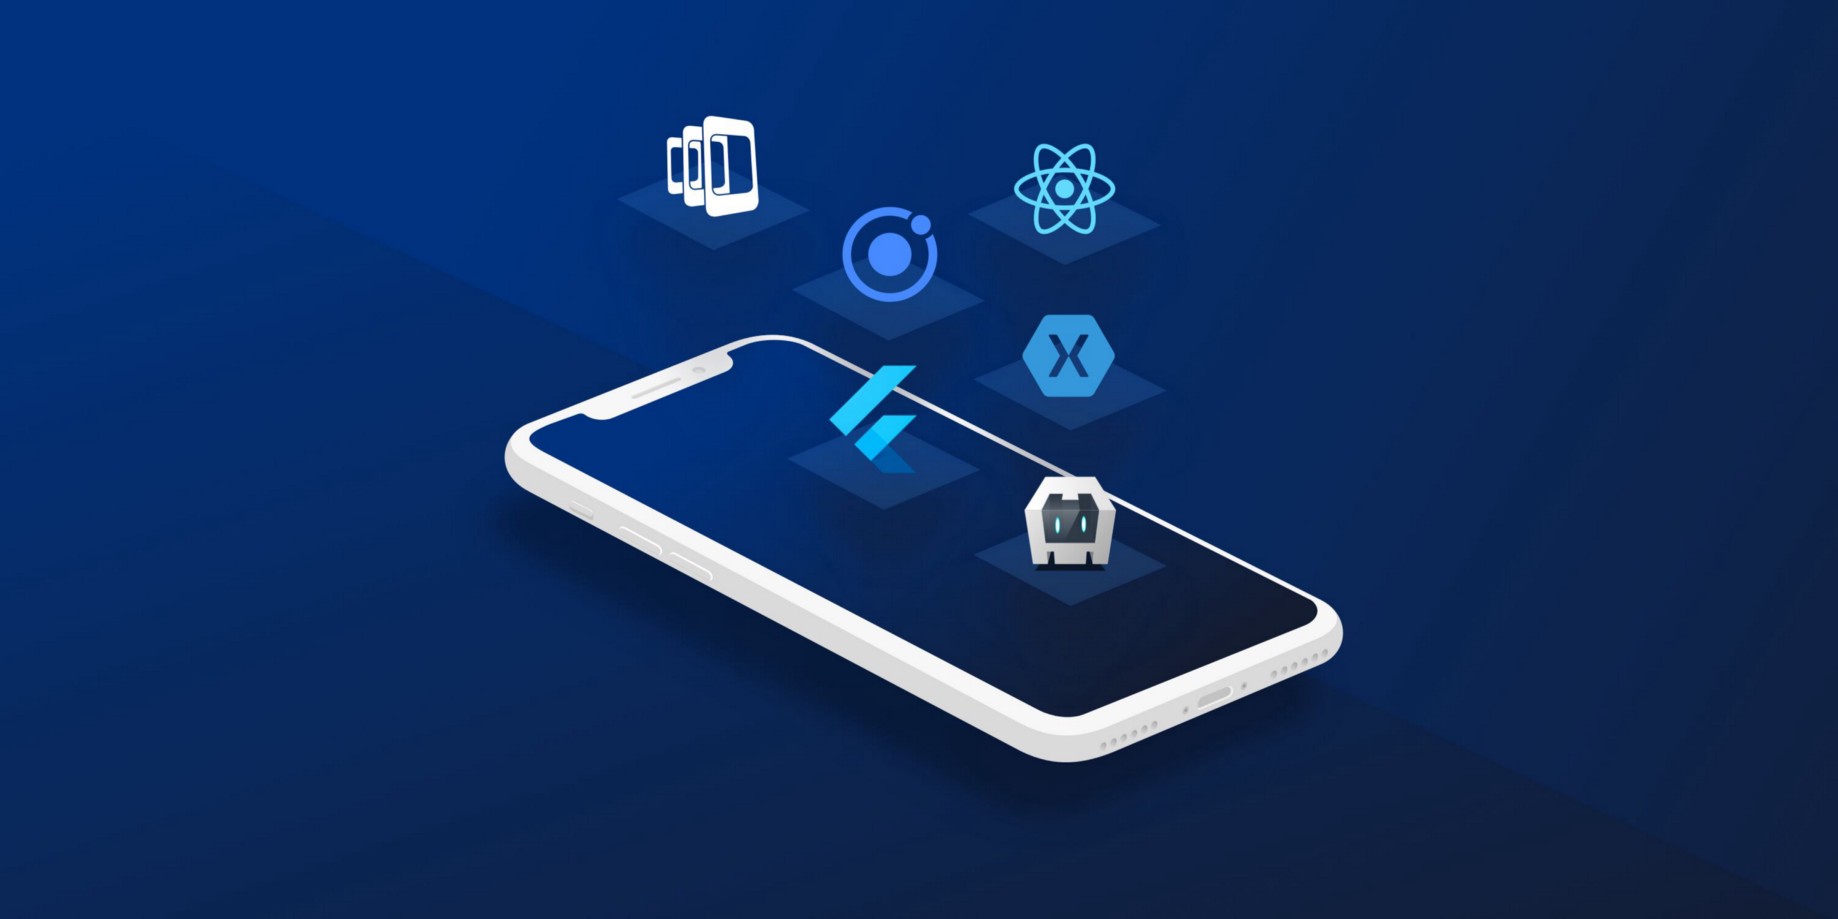 Know the features of cross platform app development